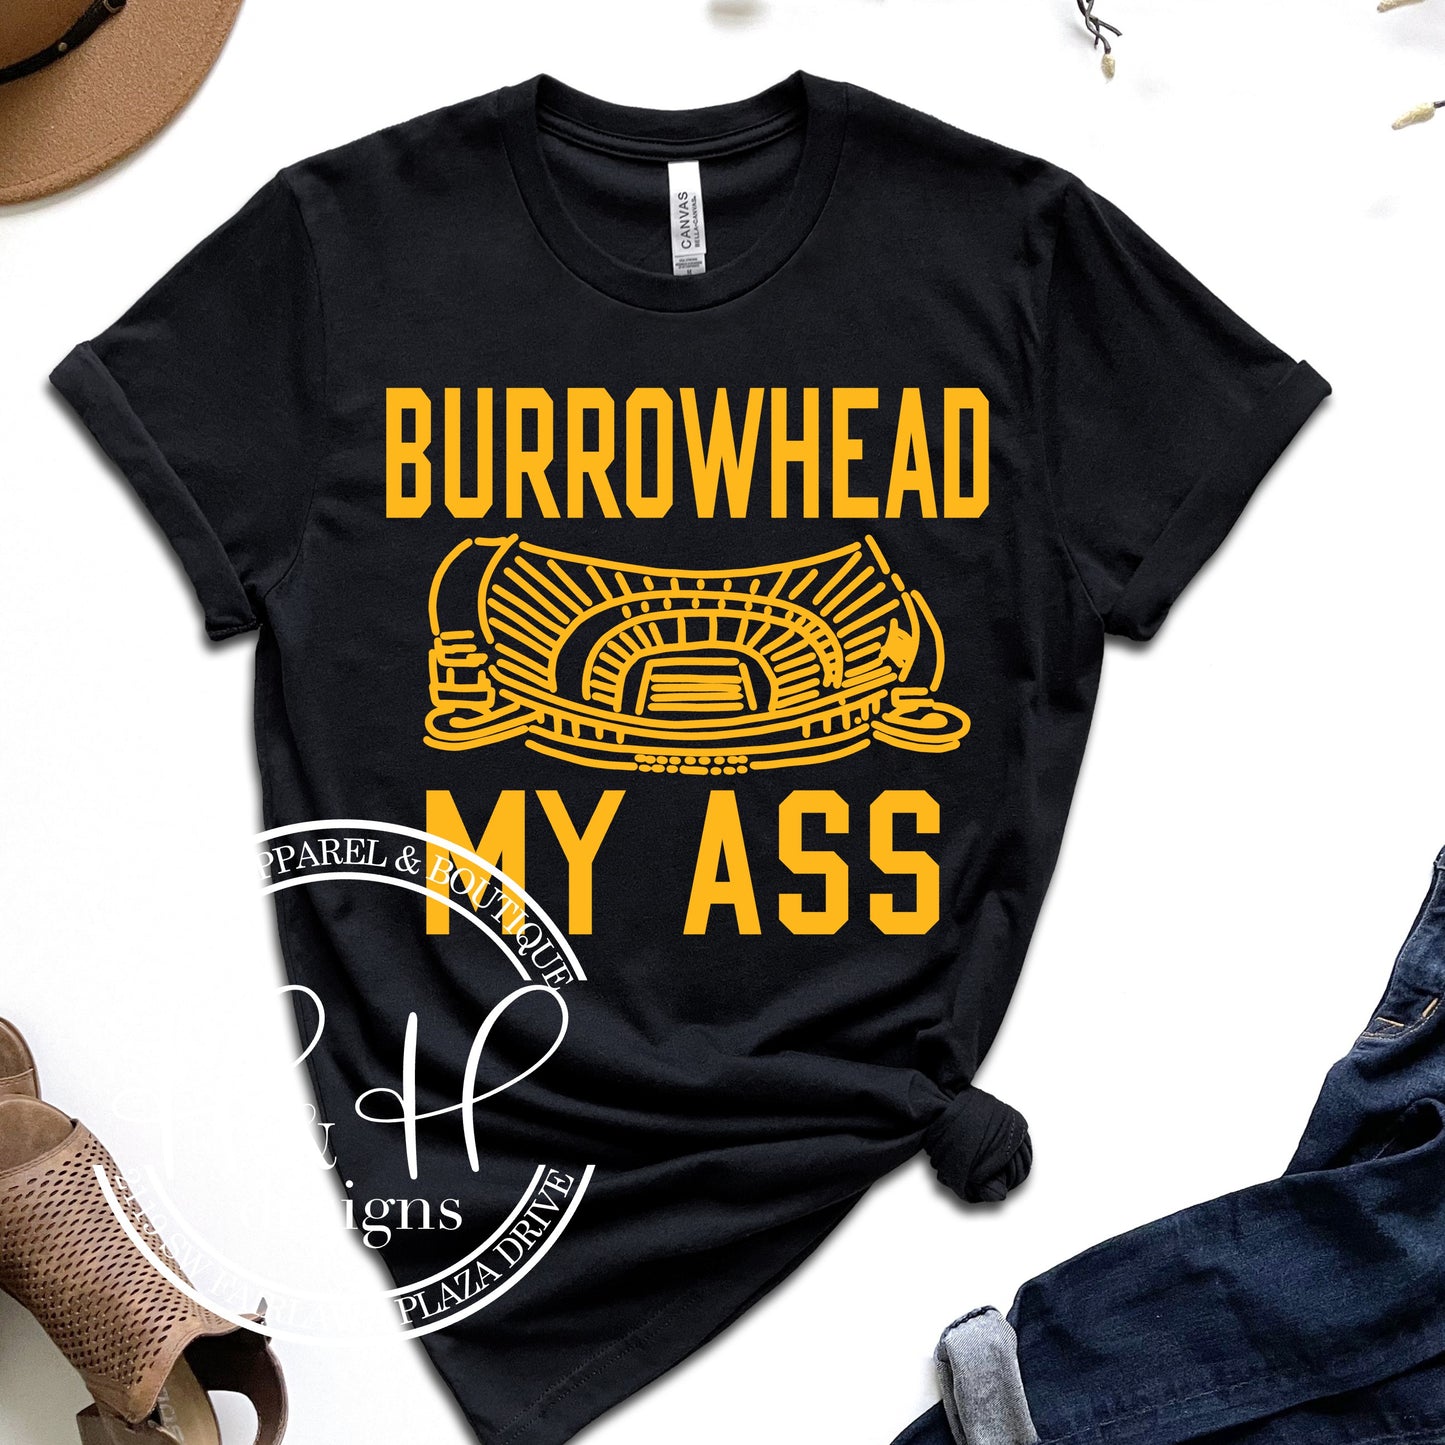 Burrowhead My Ass with Stadium